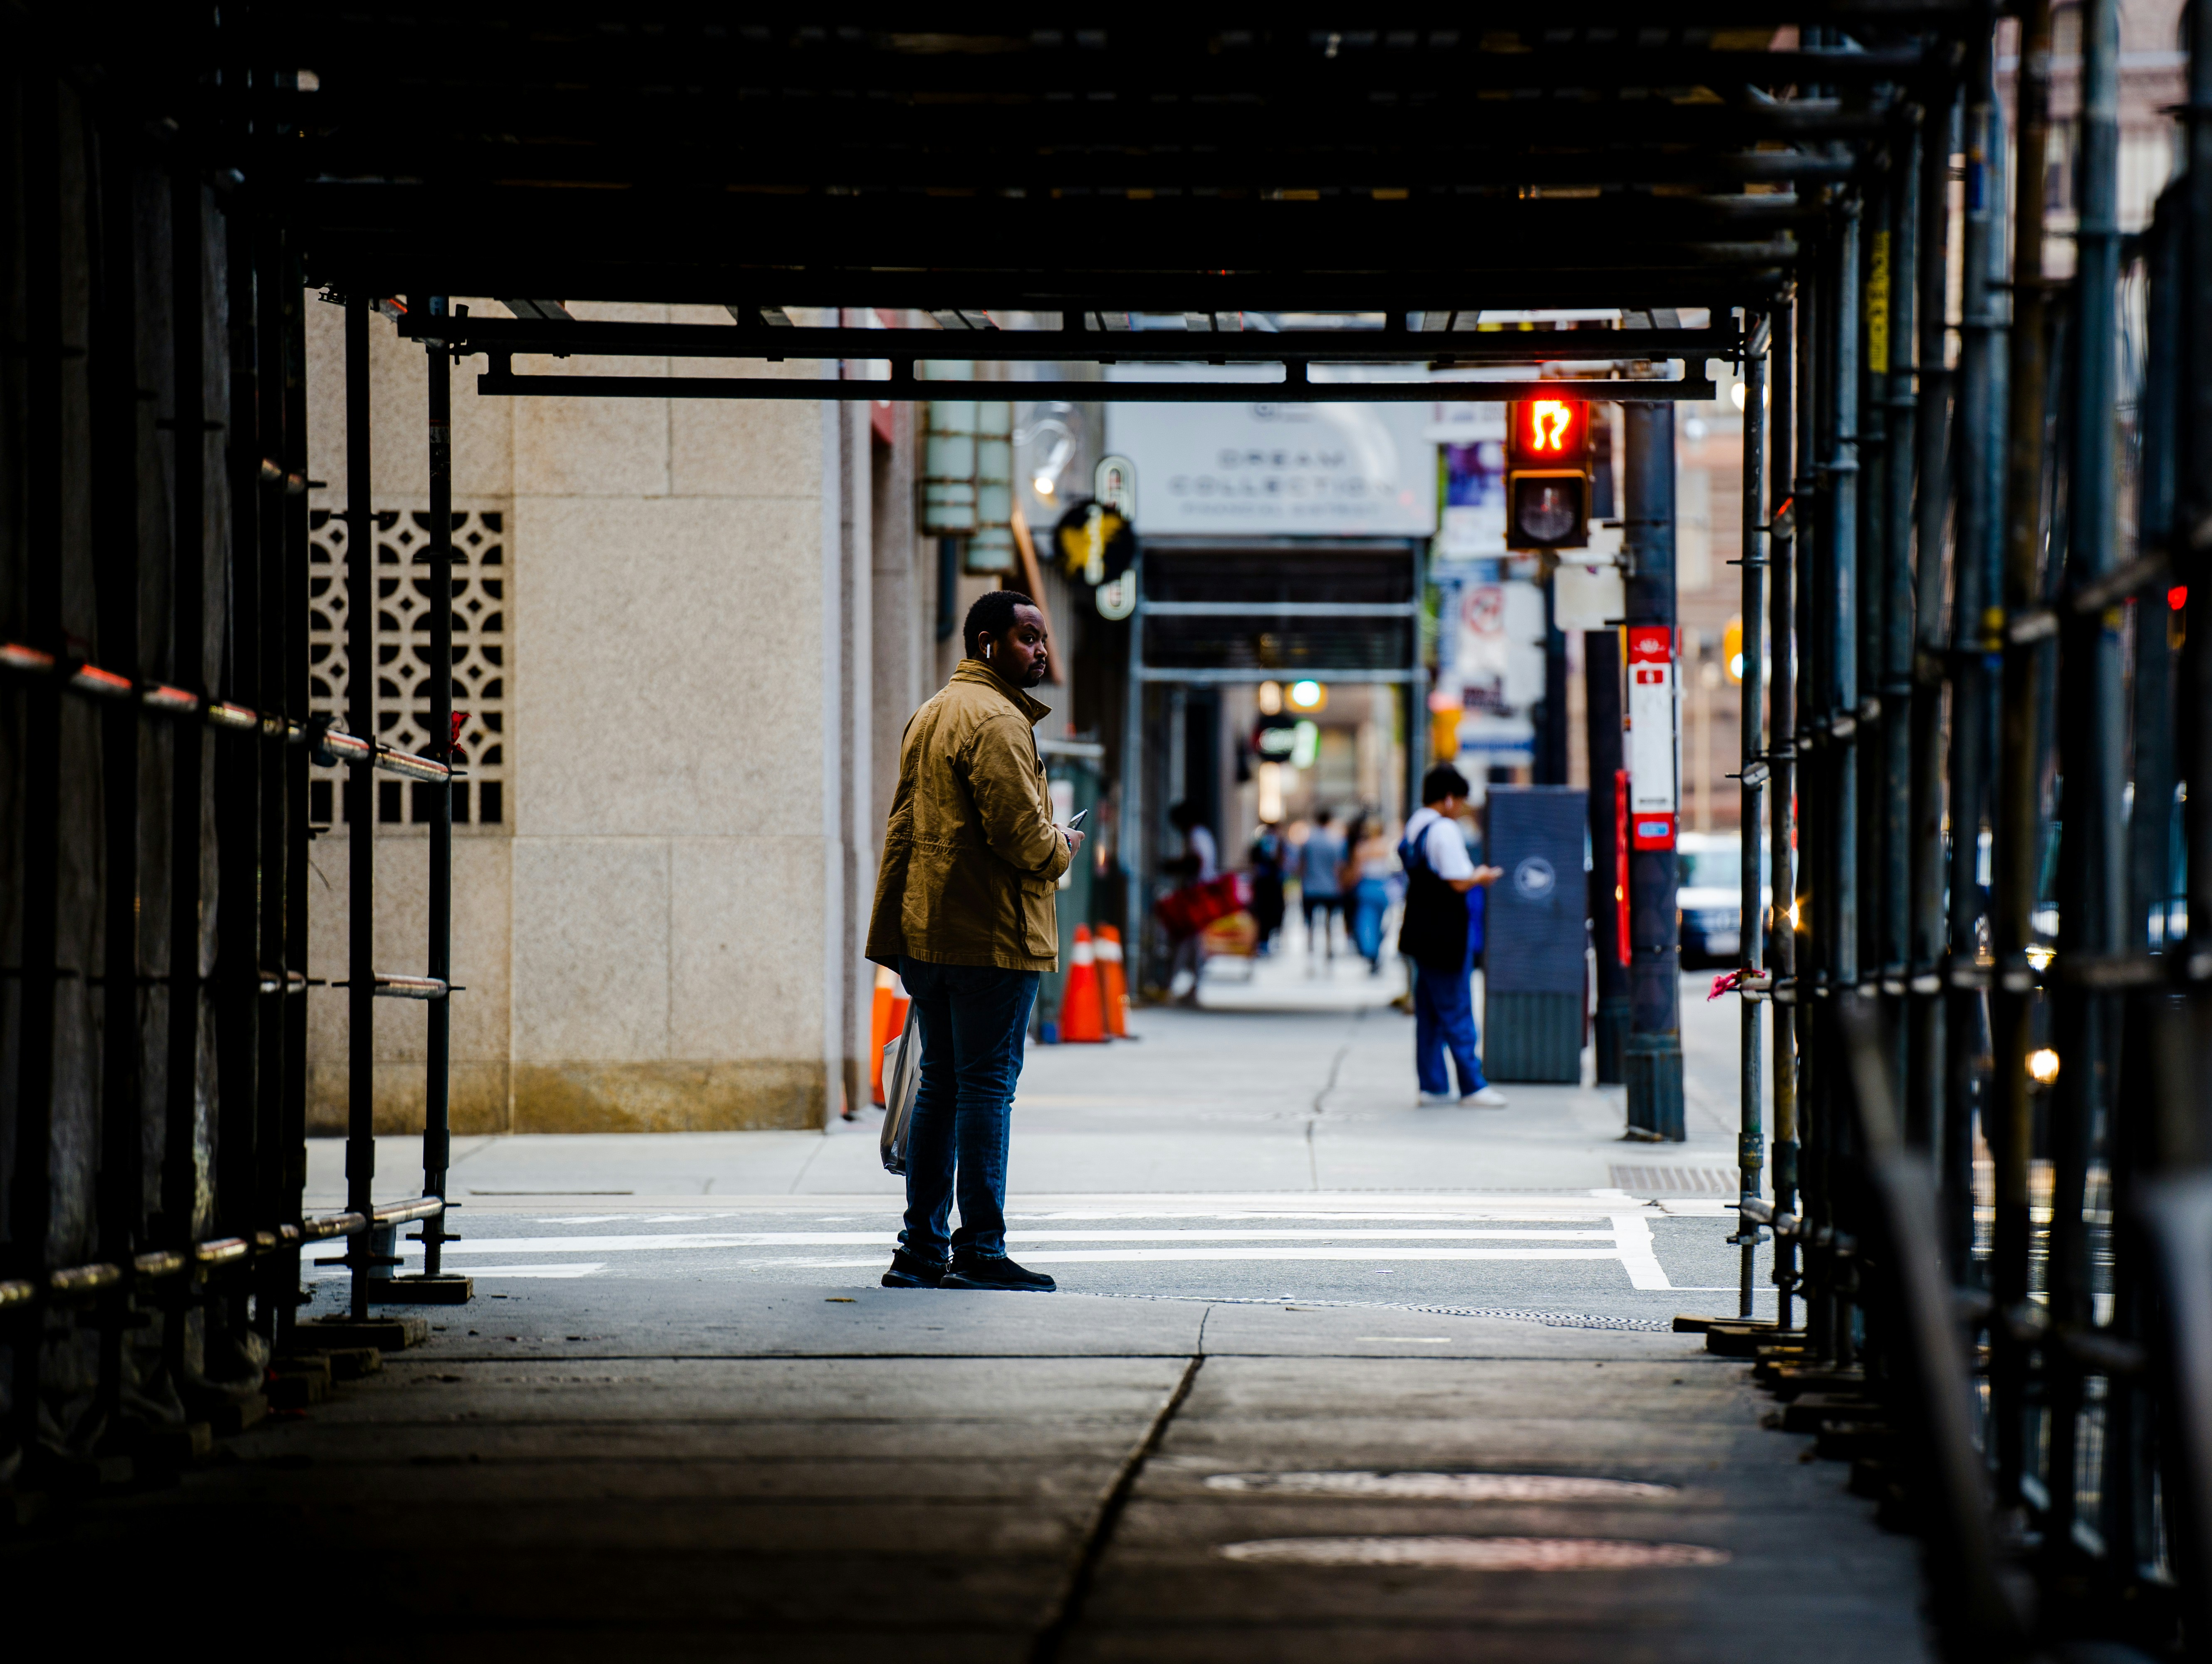 woman in brown coat standing on sidewalk during daytime